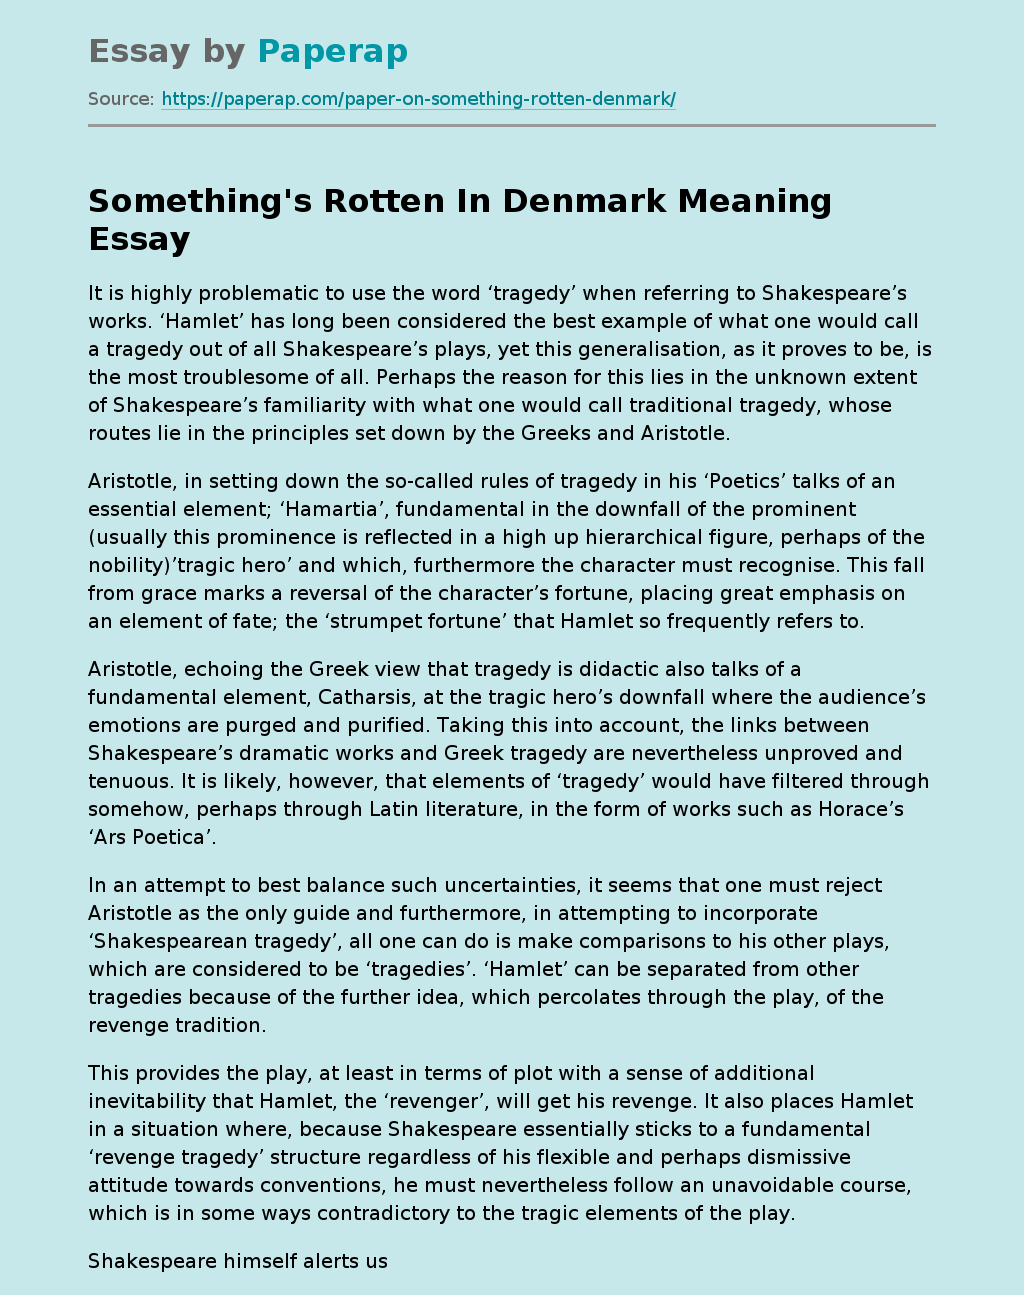 Something's Rotten In Denmark Meaning